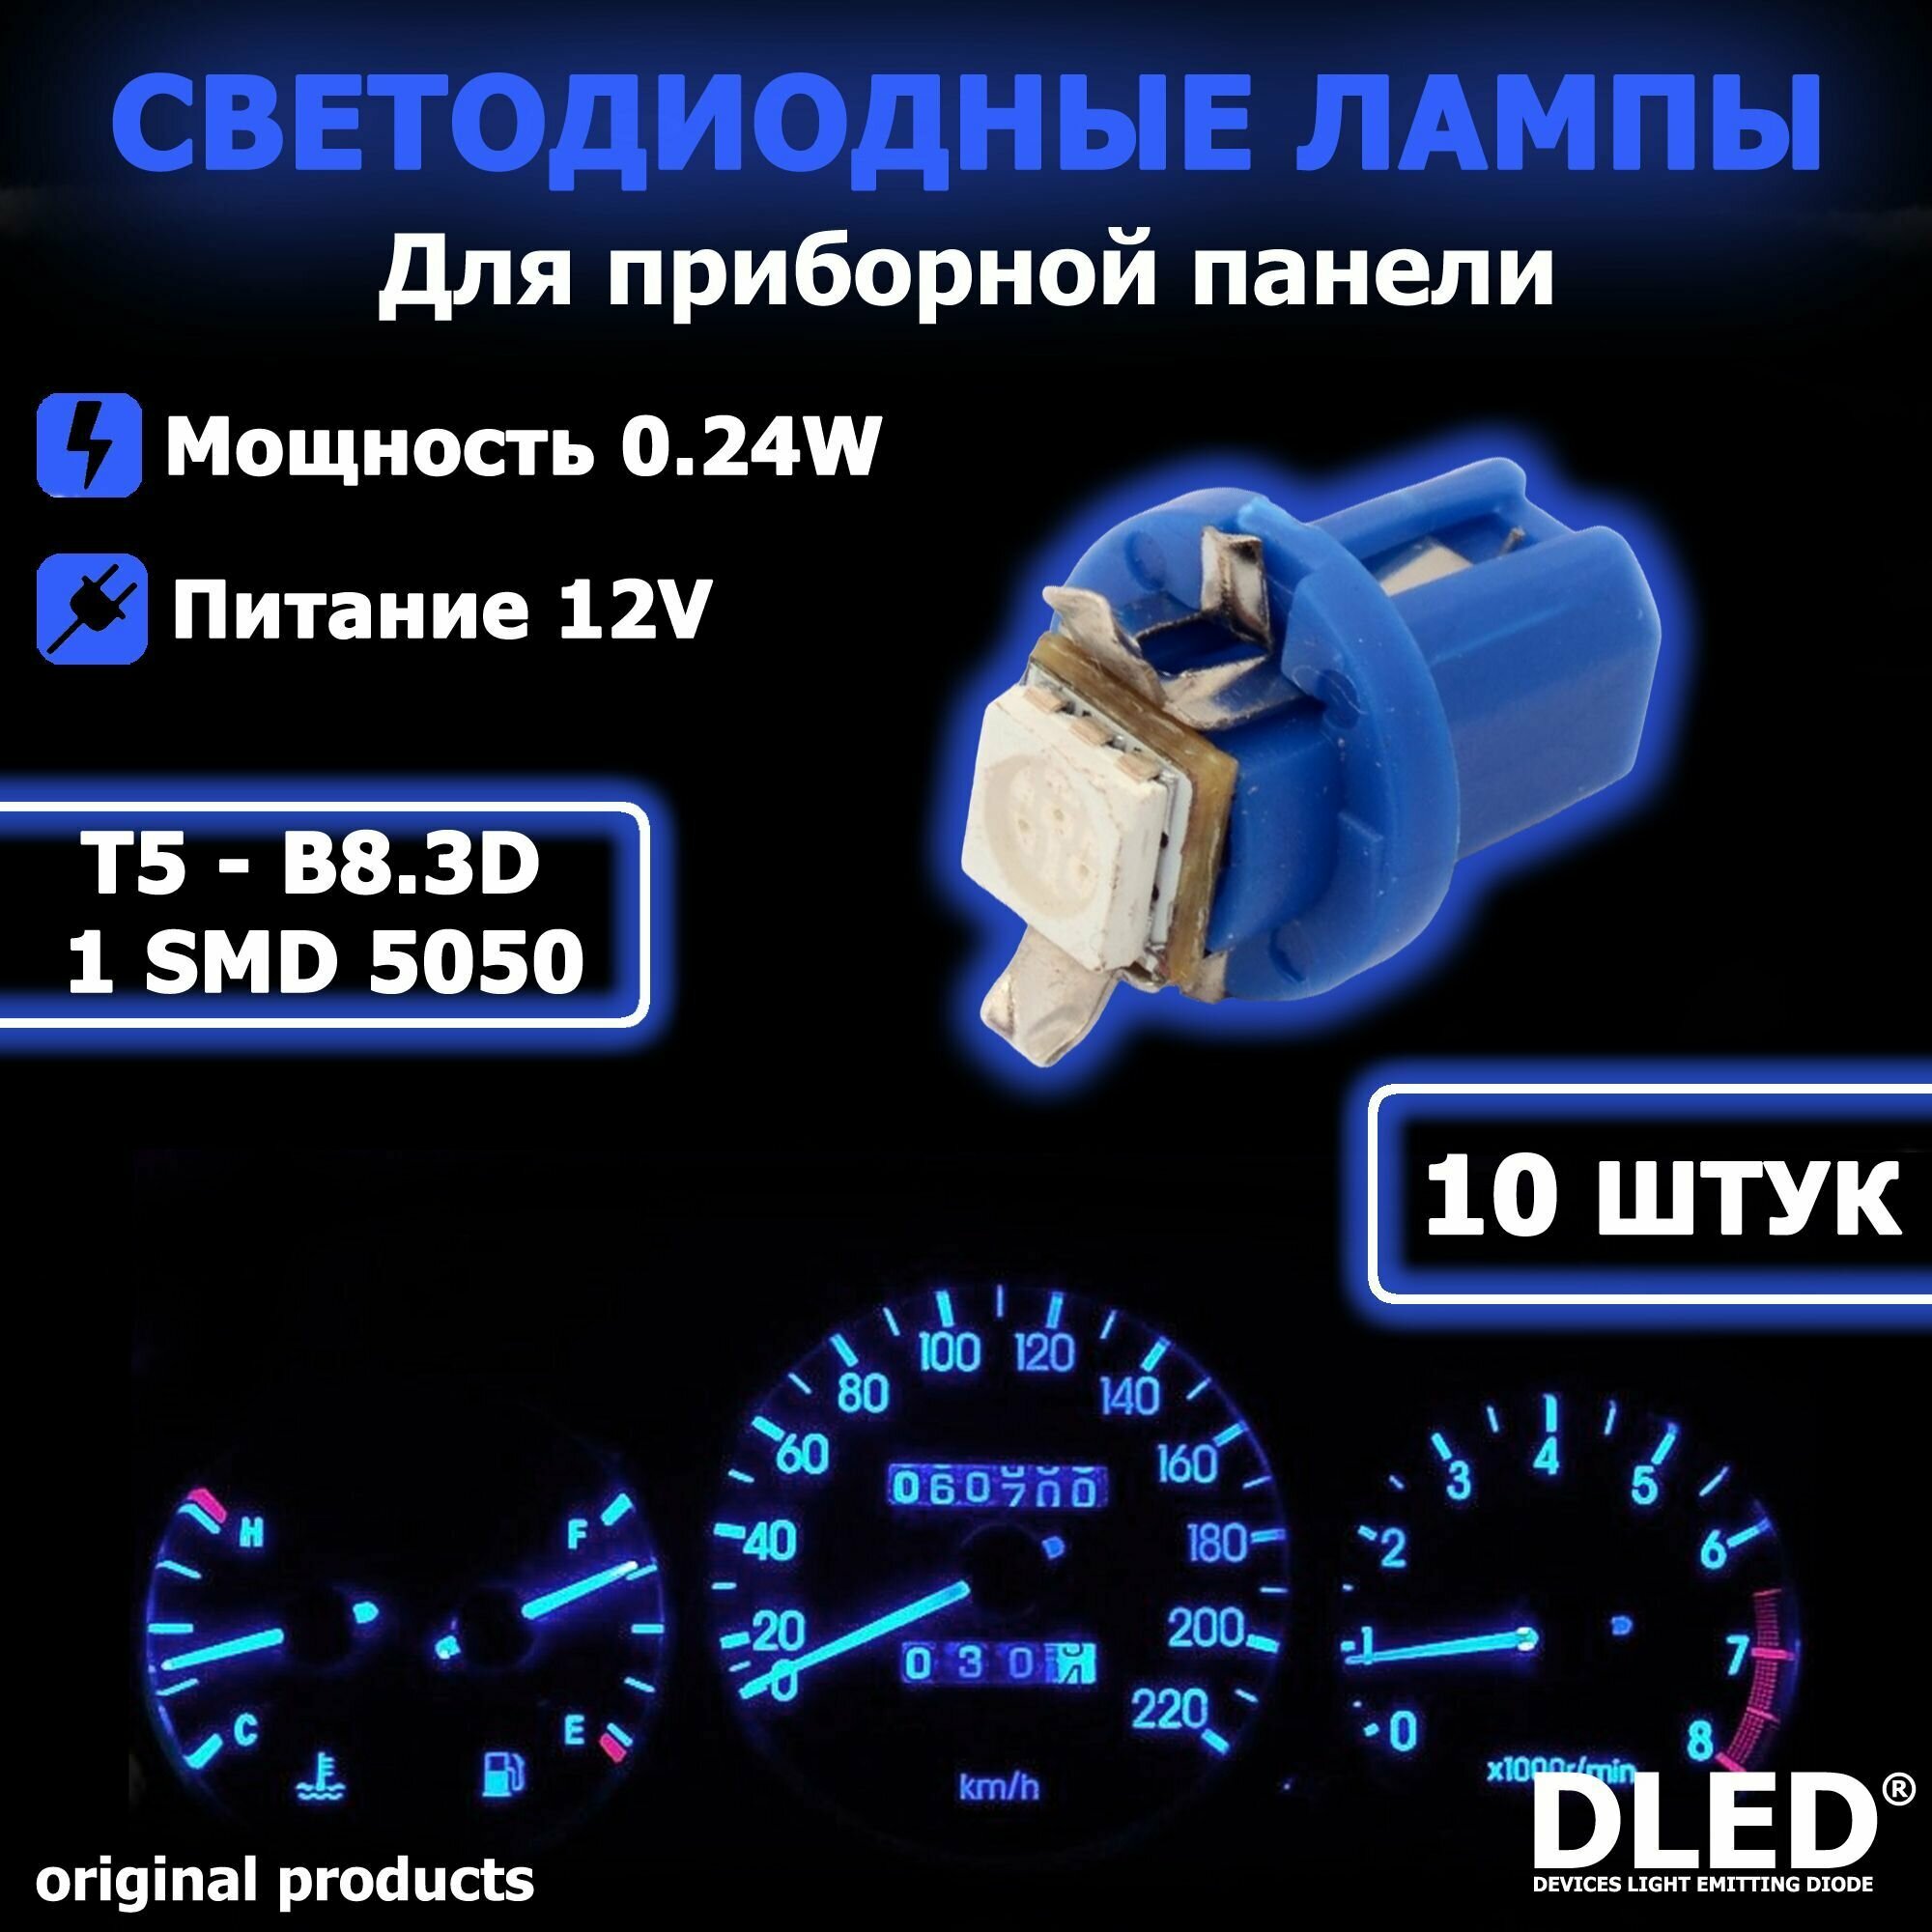 LED автомобильная лампа T5 - B8.3D - 1 SMD 5050 (Синий свет) - Набор из 10 шт.